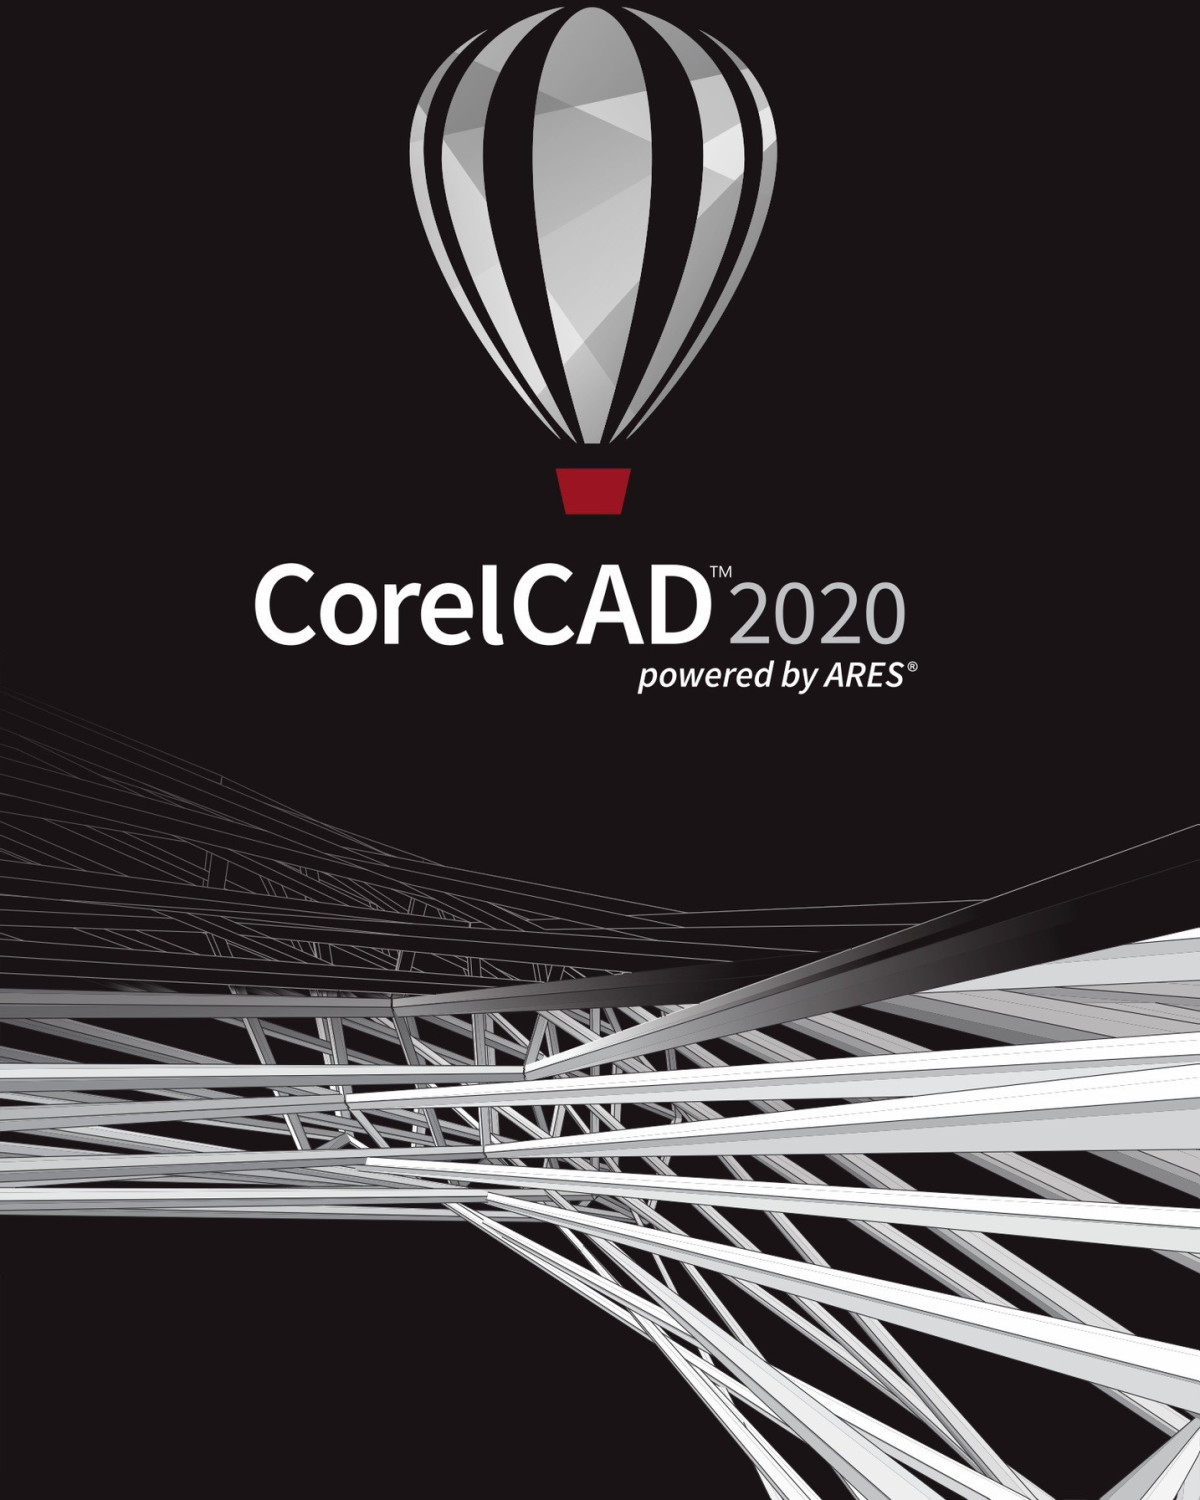 coreldraw 2020 upgrade